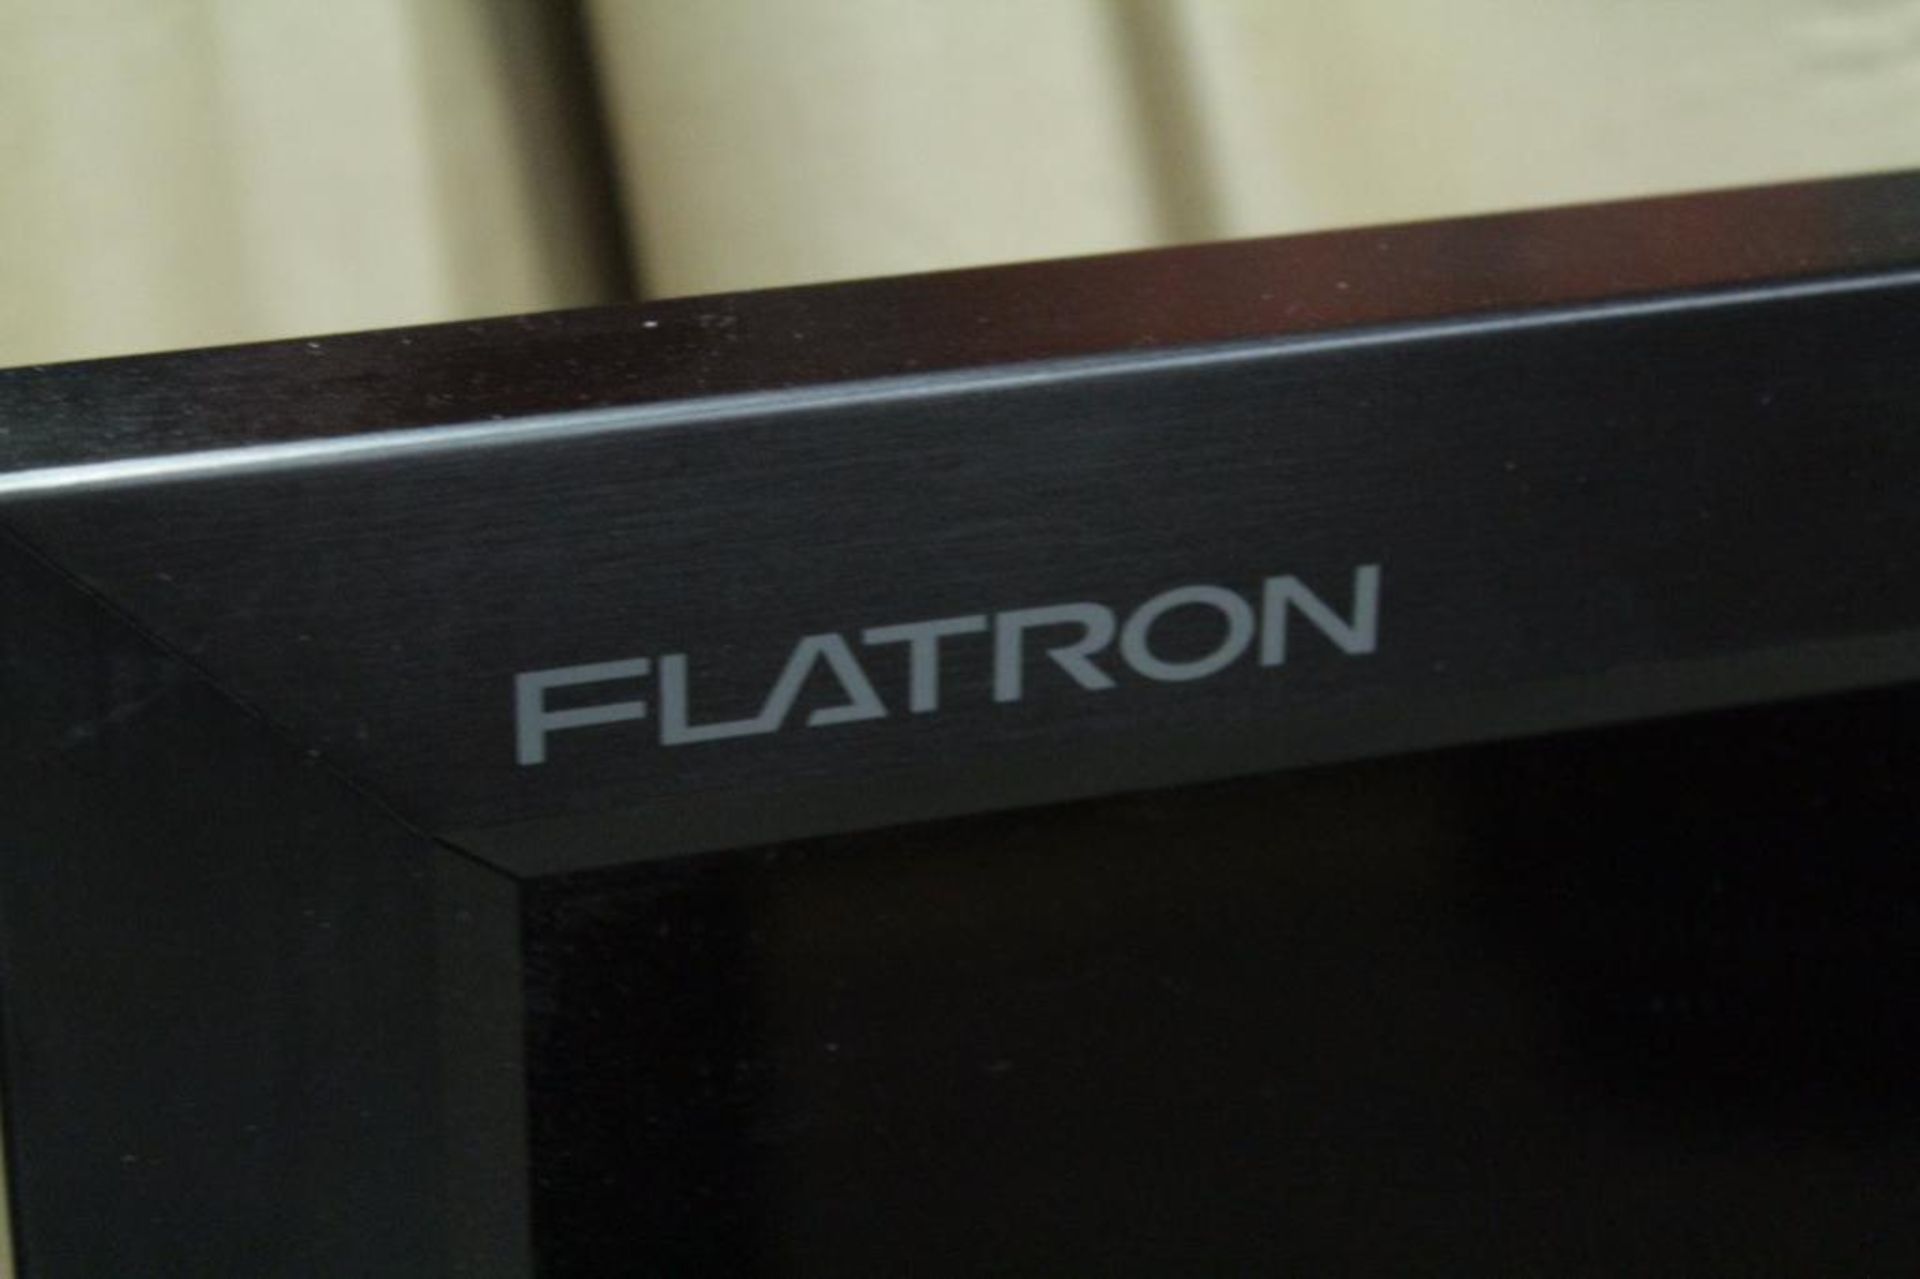 LG Flatron 65" LCD Monitor Model M6503CG - Image 3 of 4